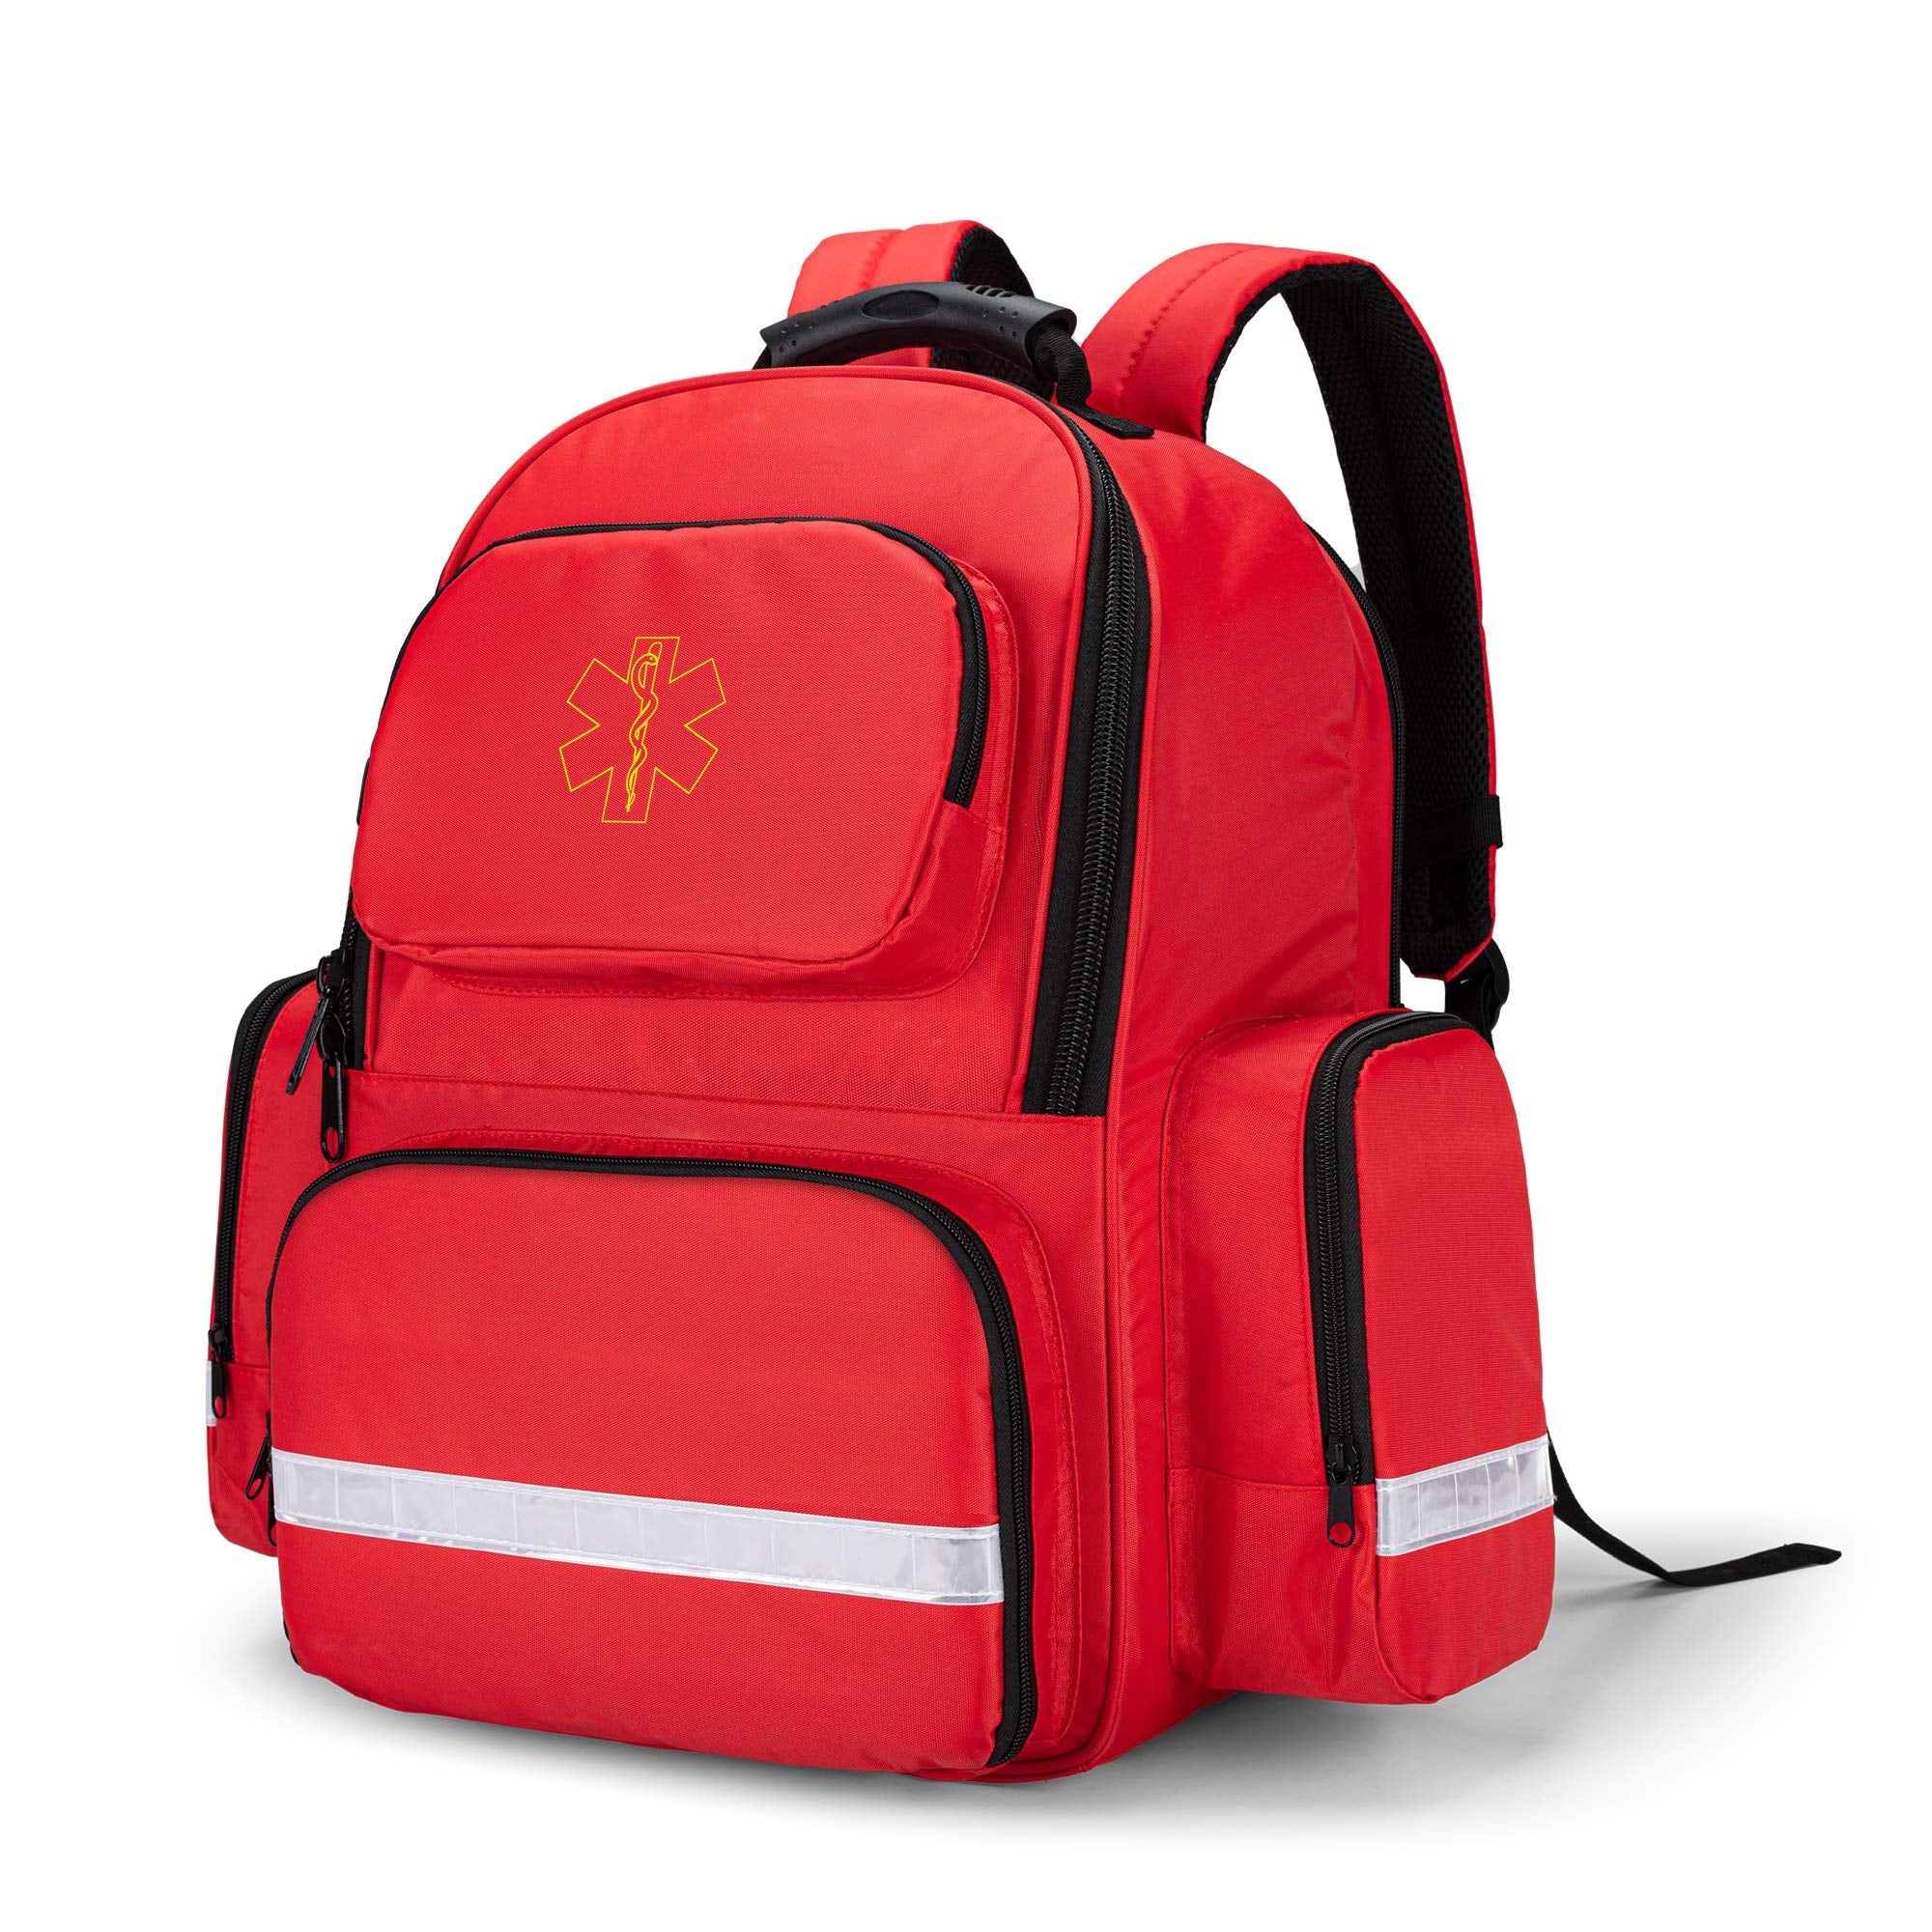 Trunab First Responder Bag Trauma Backpack Empty, Medical Emergency Kits Storage Jump Bag Pack for EMT, EMS, Police, Firefighters, Safety Officers, Red, BAG ONLY - Patented Design